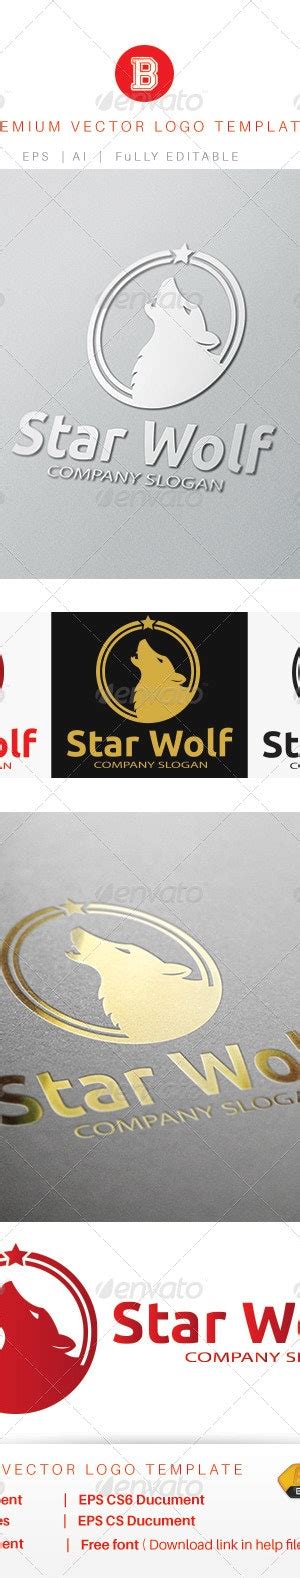 Star Wolf Logo Templates Graphicriver